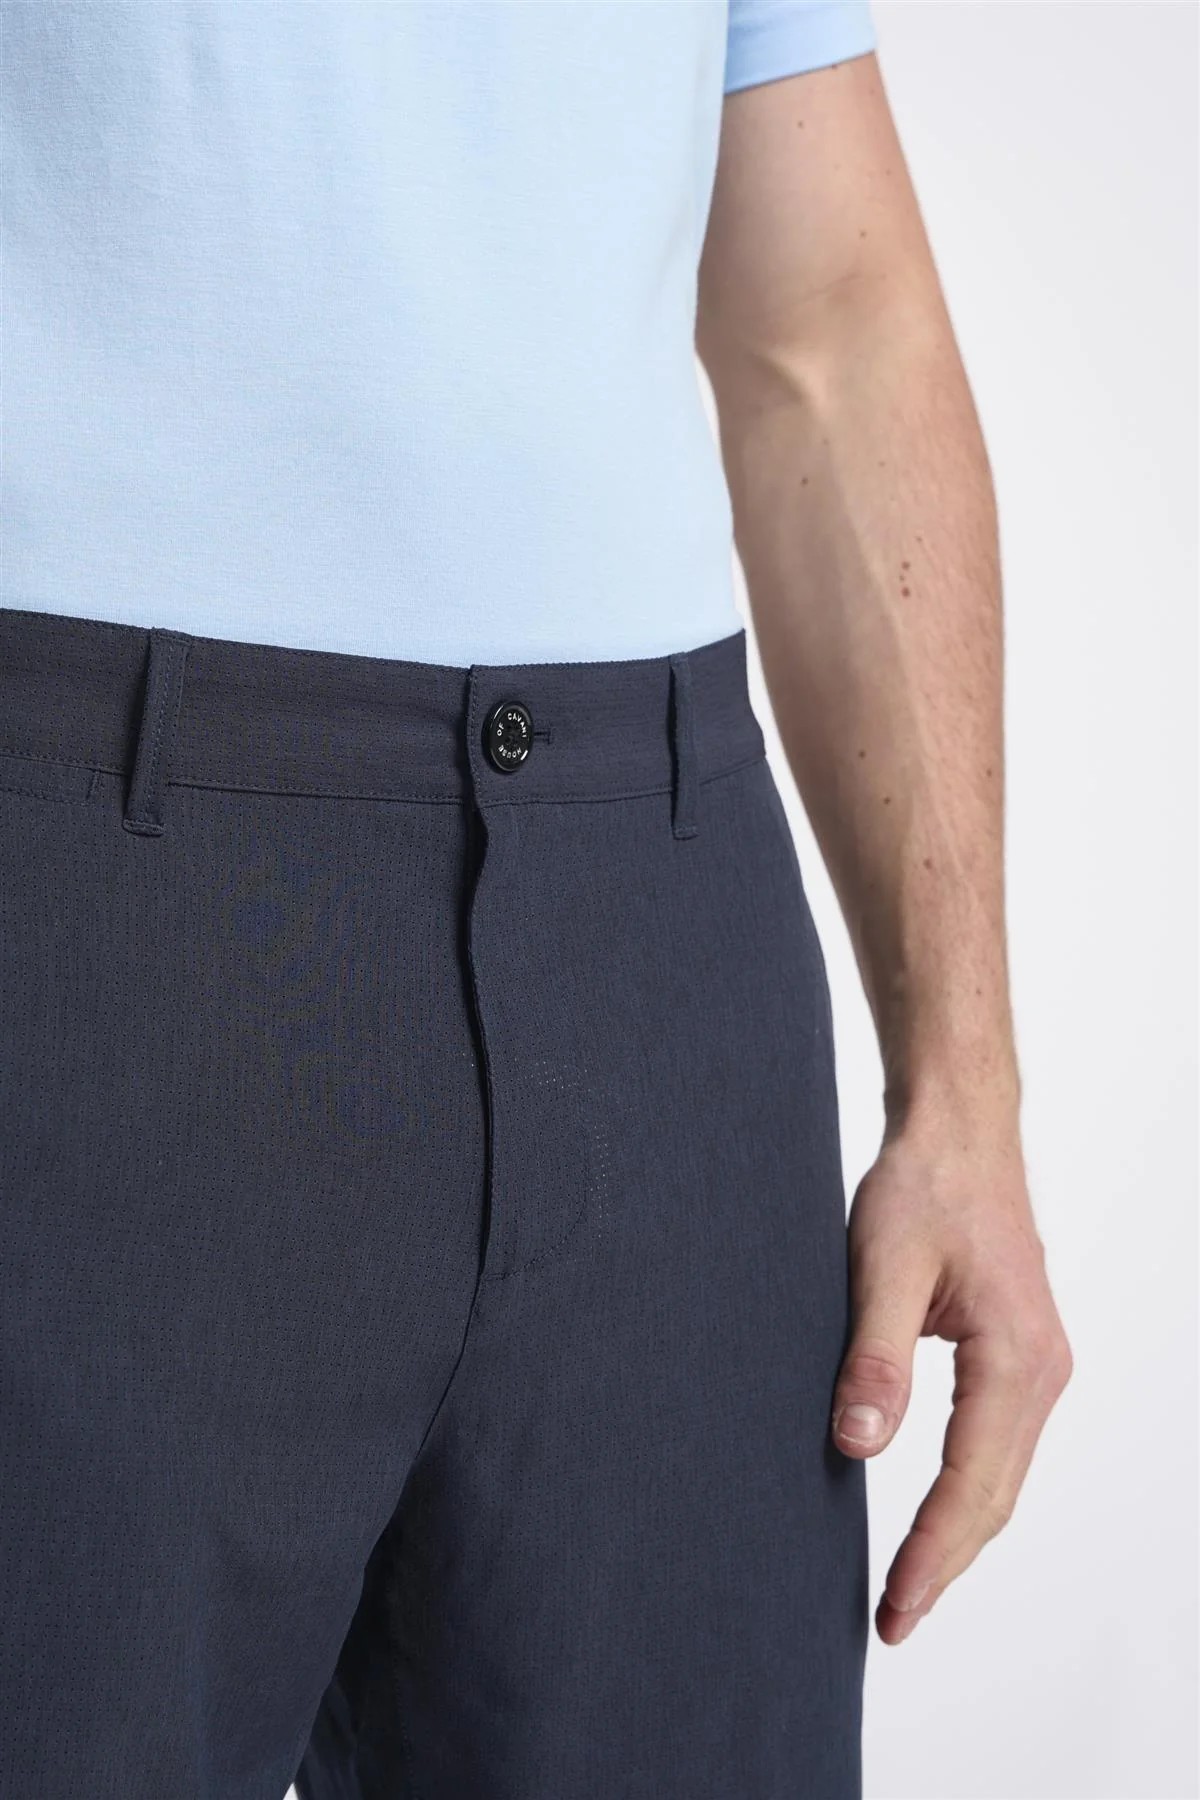 Men's Summer Essential Textured Short – DENVER - Navy